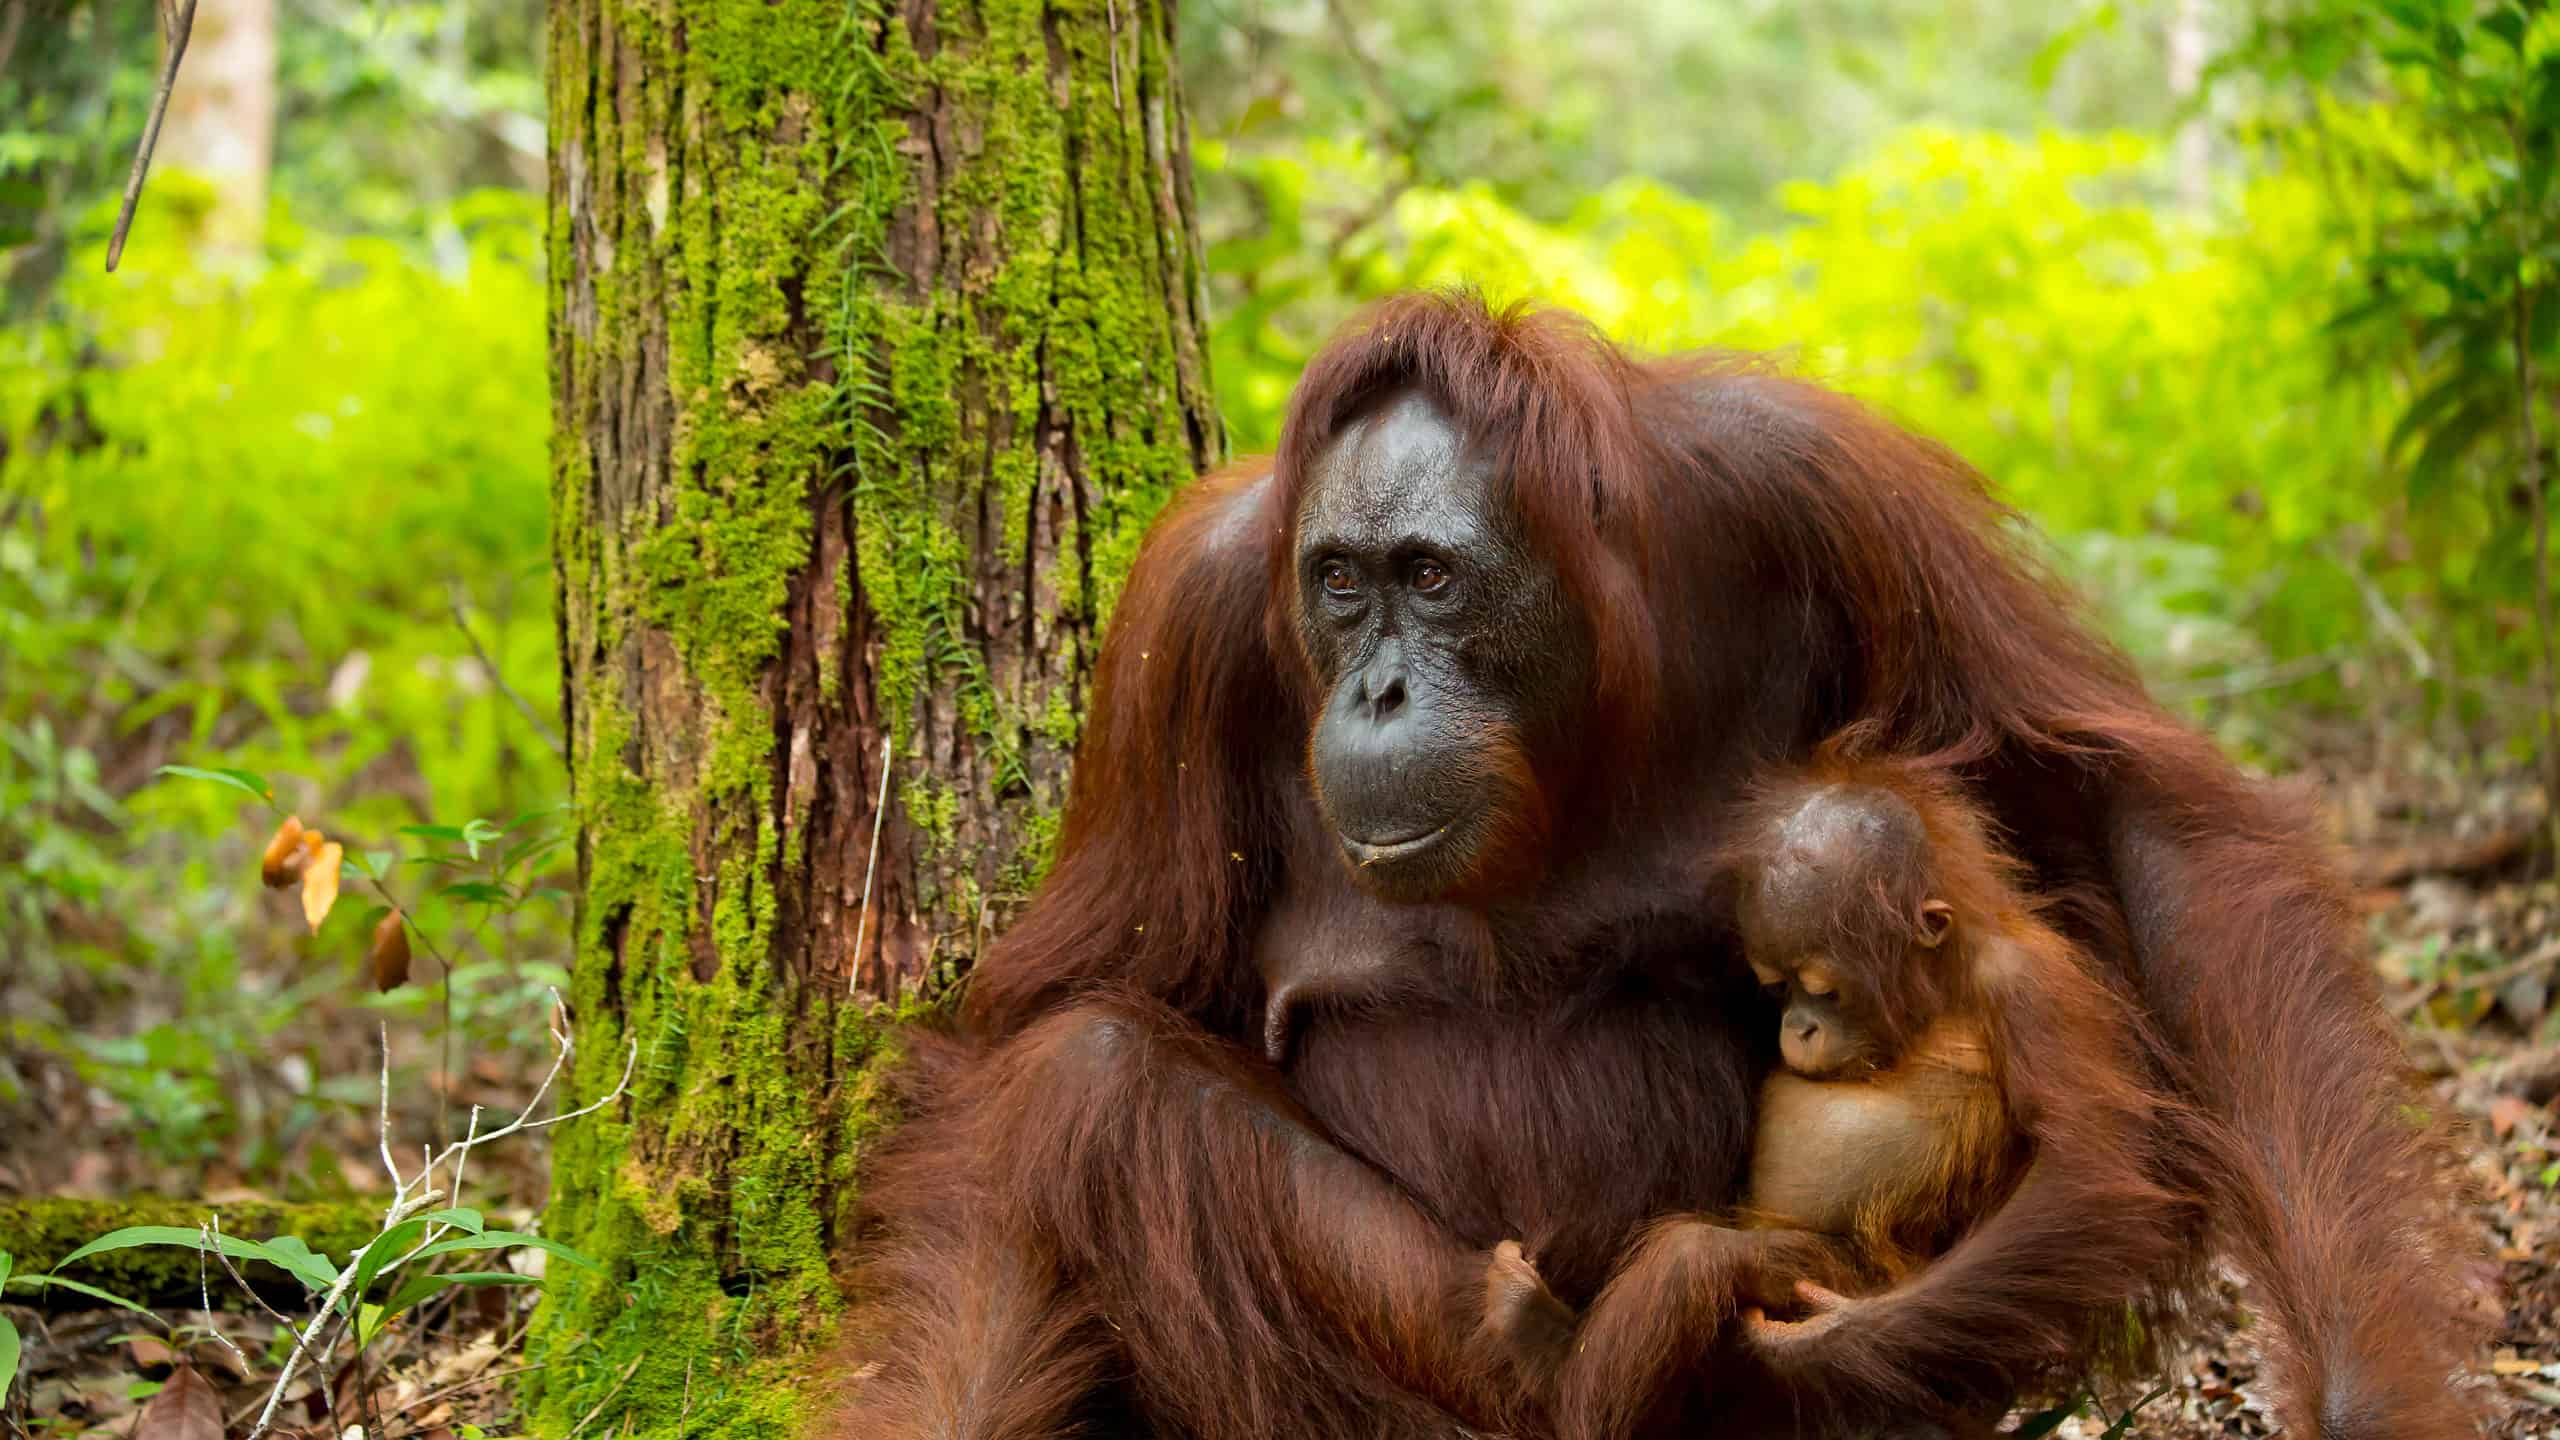 Orangutan in Indonesia with her baby.